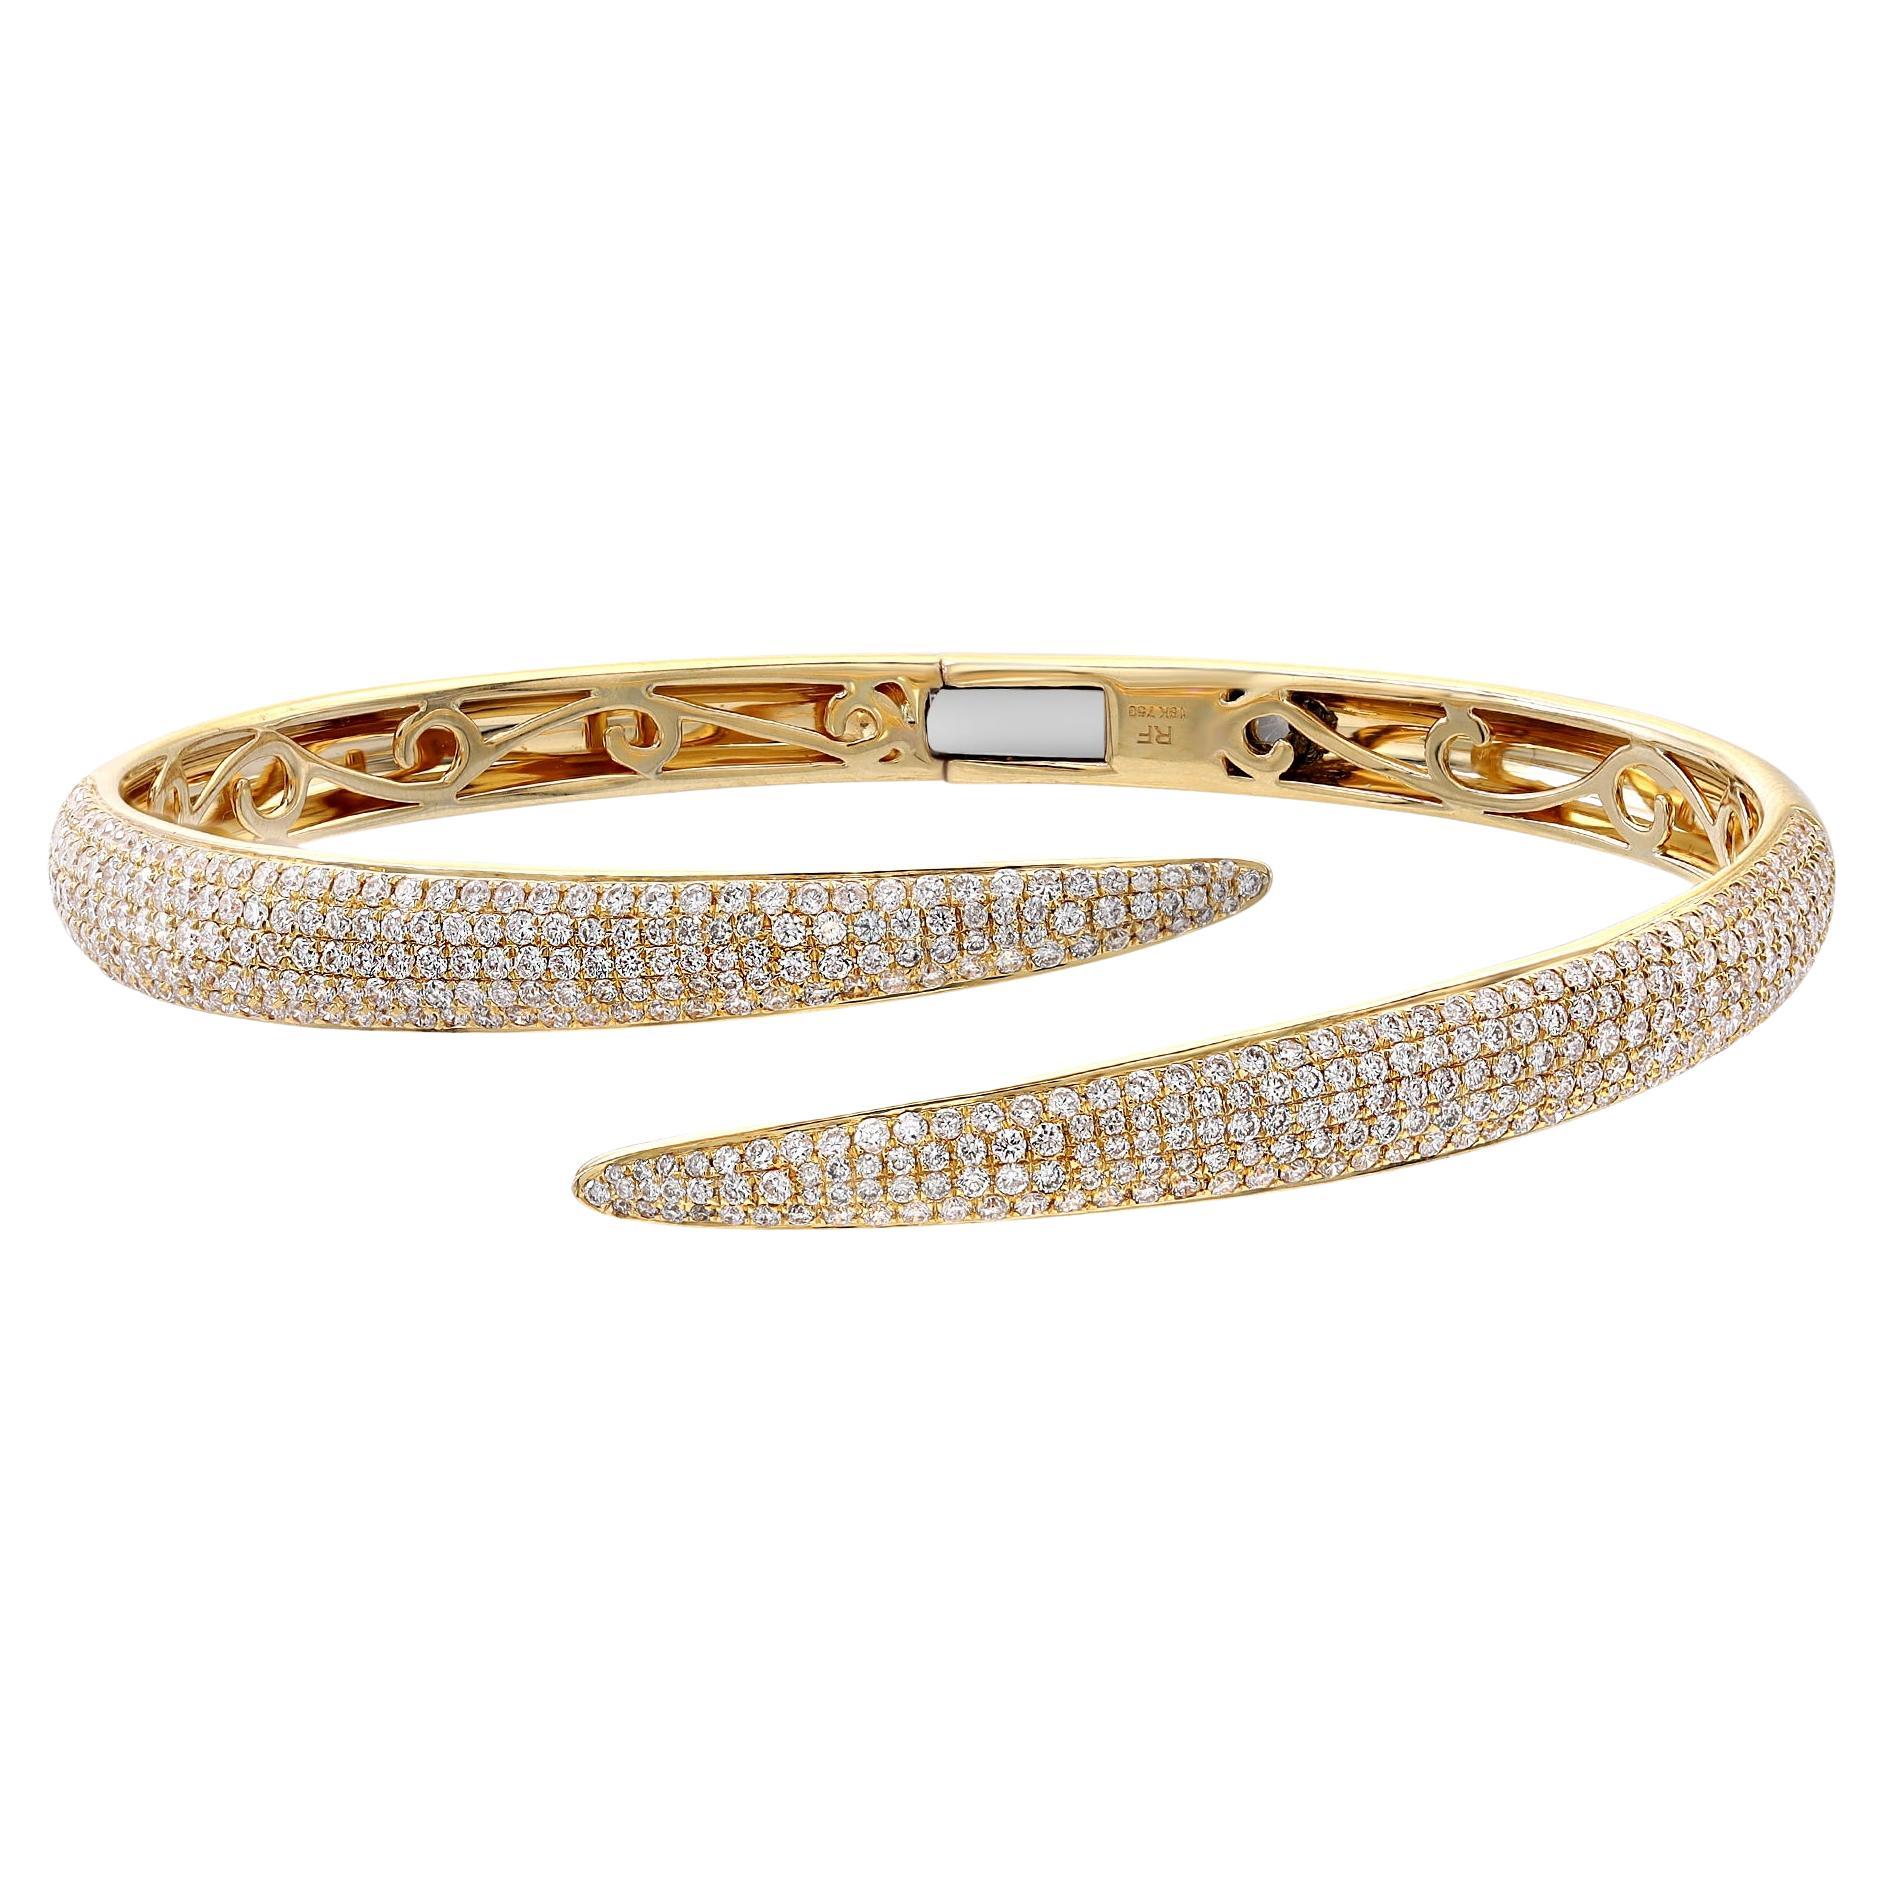 Rachel Koen Pave Set Round Cut Diamond Bangle Bracelet 18K Yellow Gold 2.70cttw For Sale